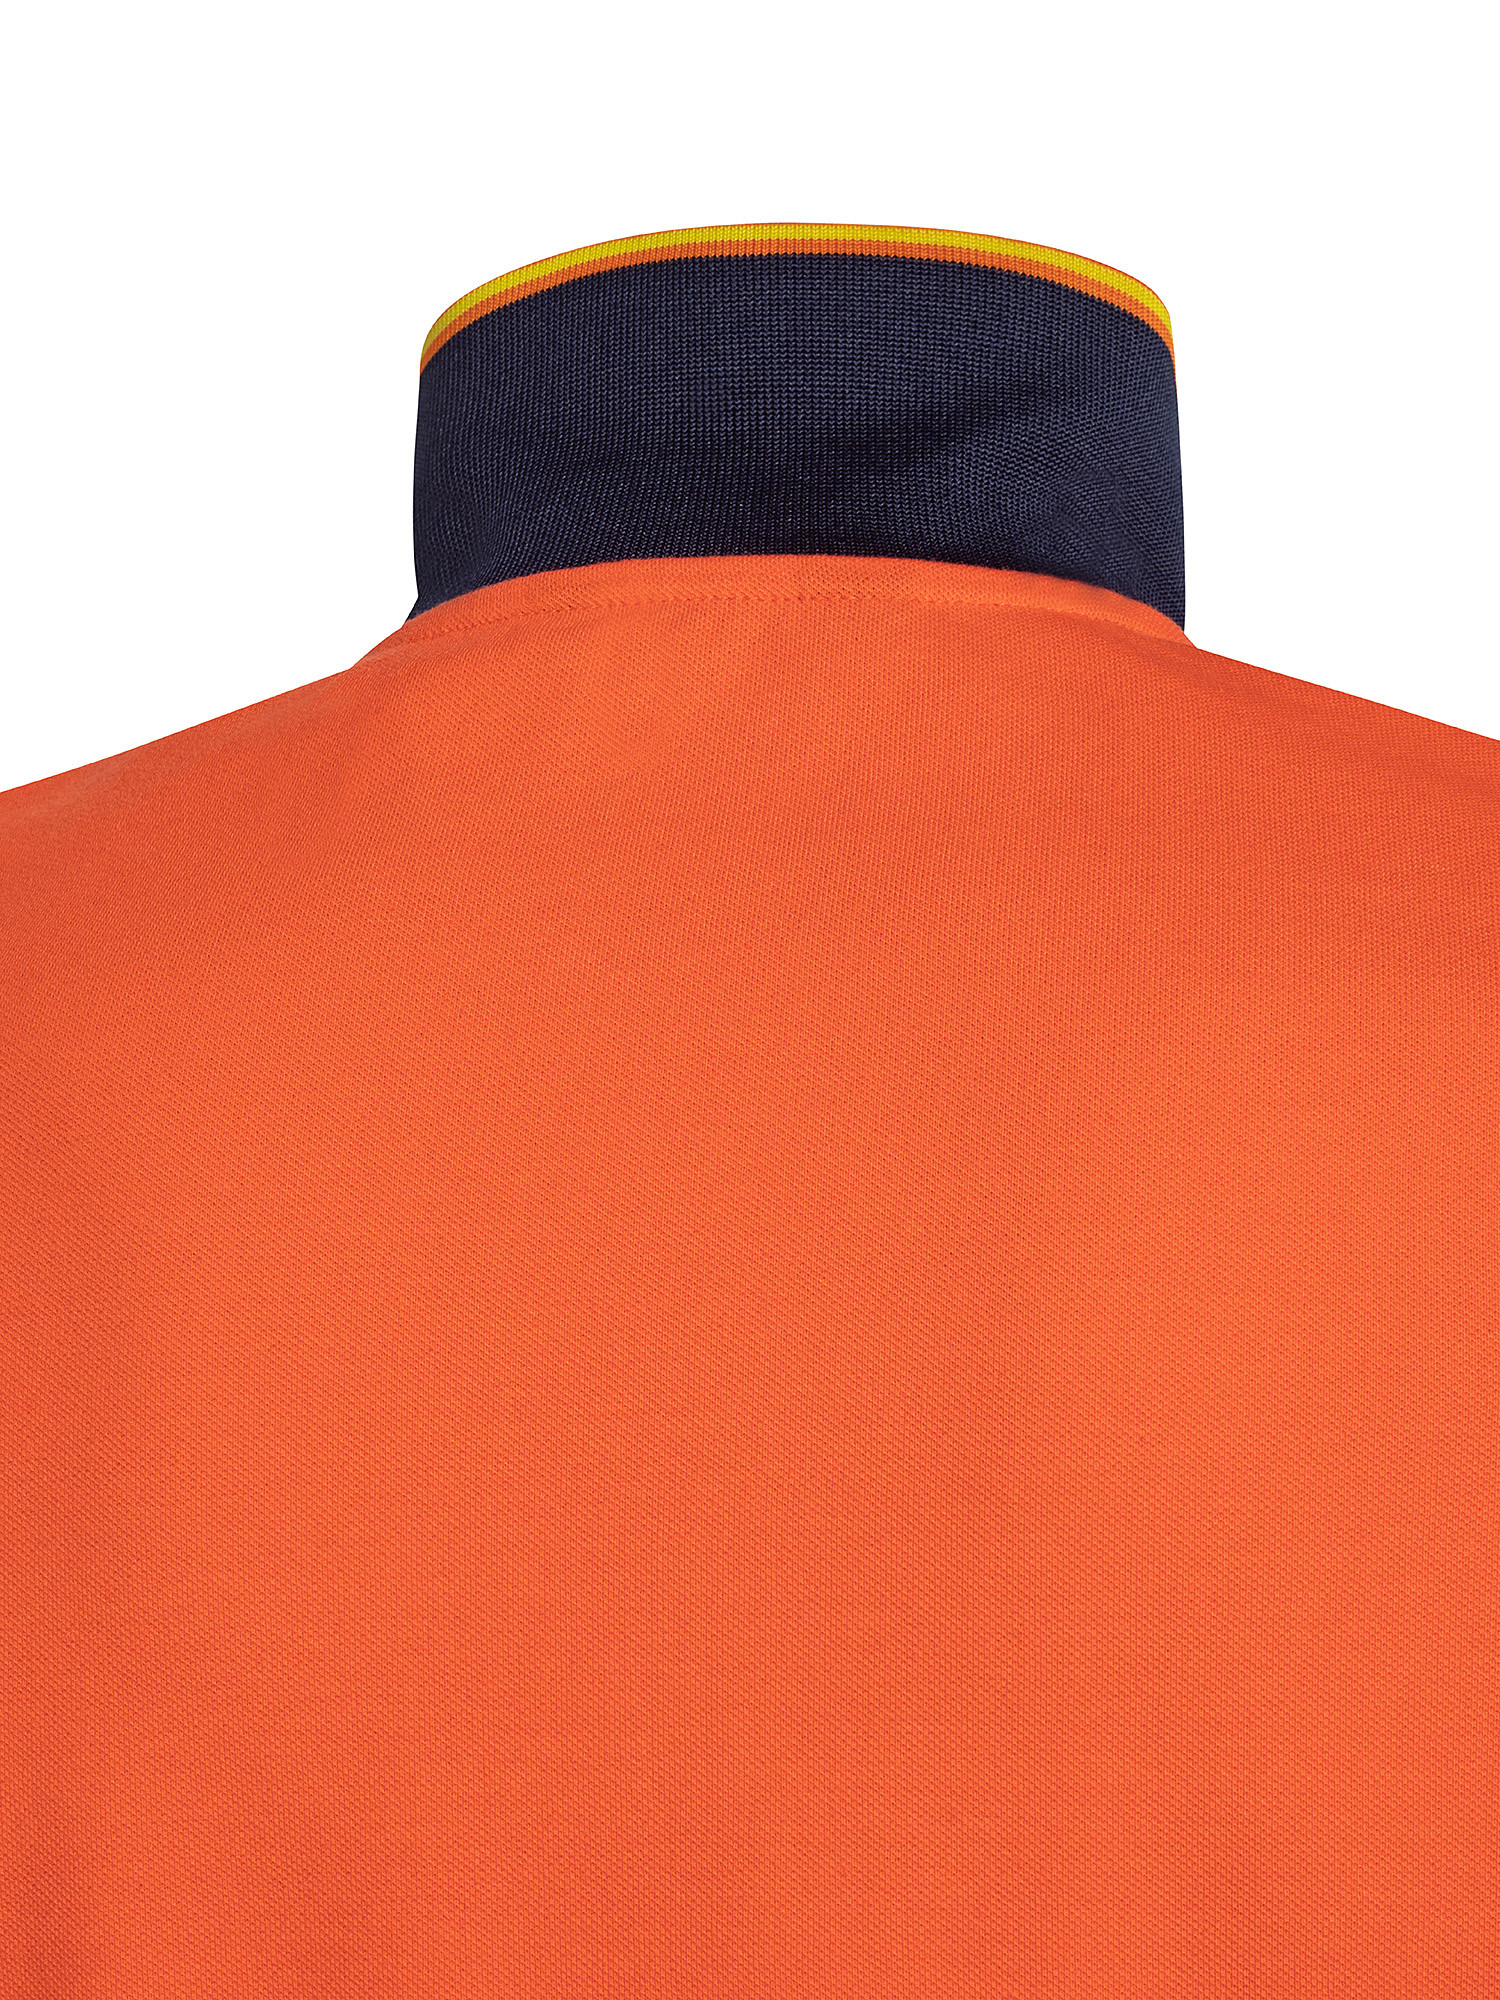 Polo slim fit elasticizzata, Arancione, large image number 2